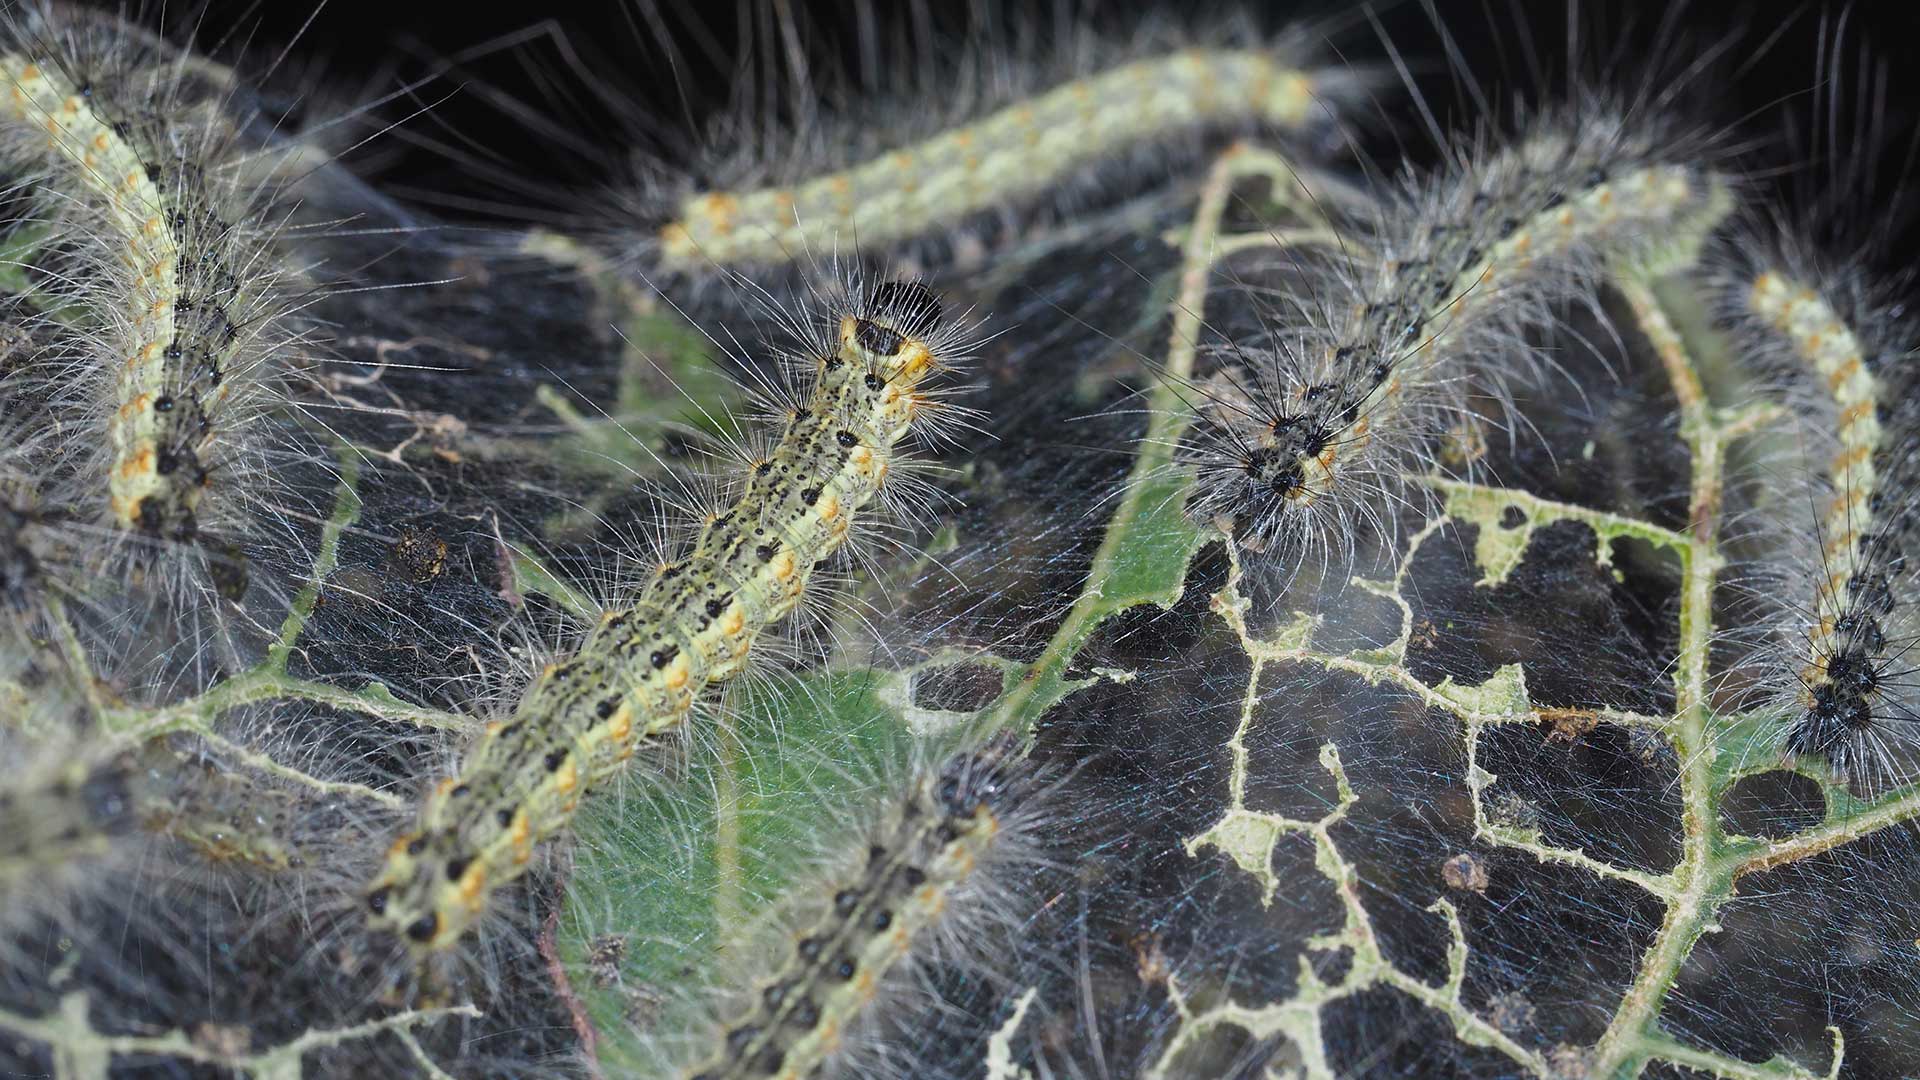 Webworms crawling on devoured leaves in Lucas, TX.